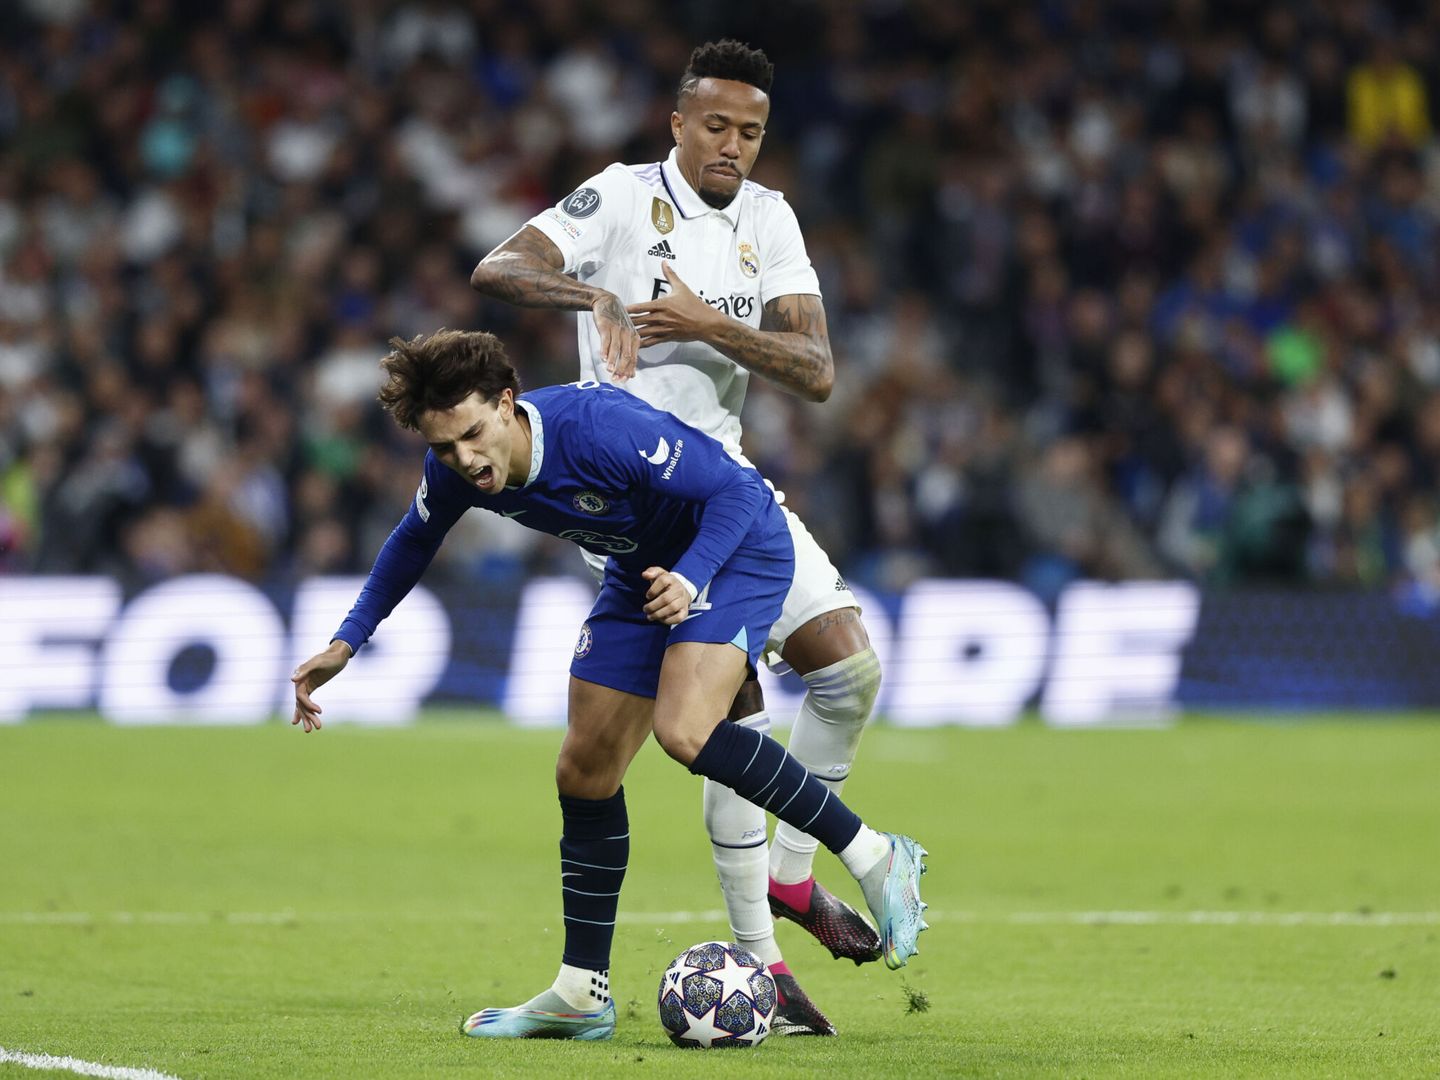 Militao arrebata un balón a Joao Félix en el partido contra el Chelsea en el Bernabéu